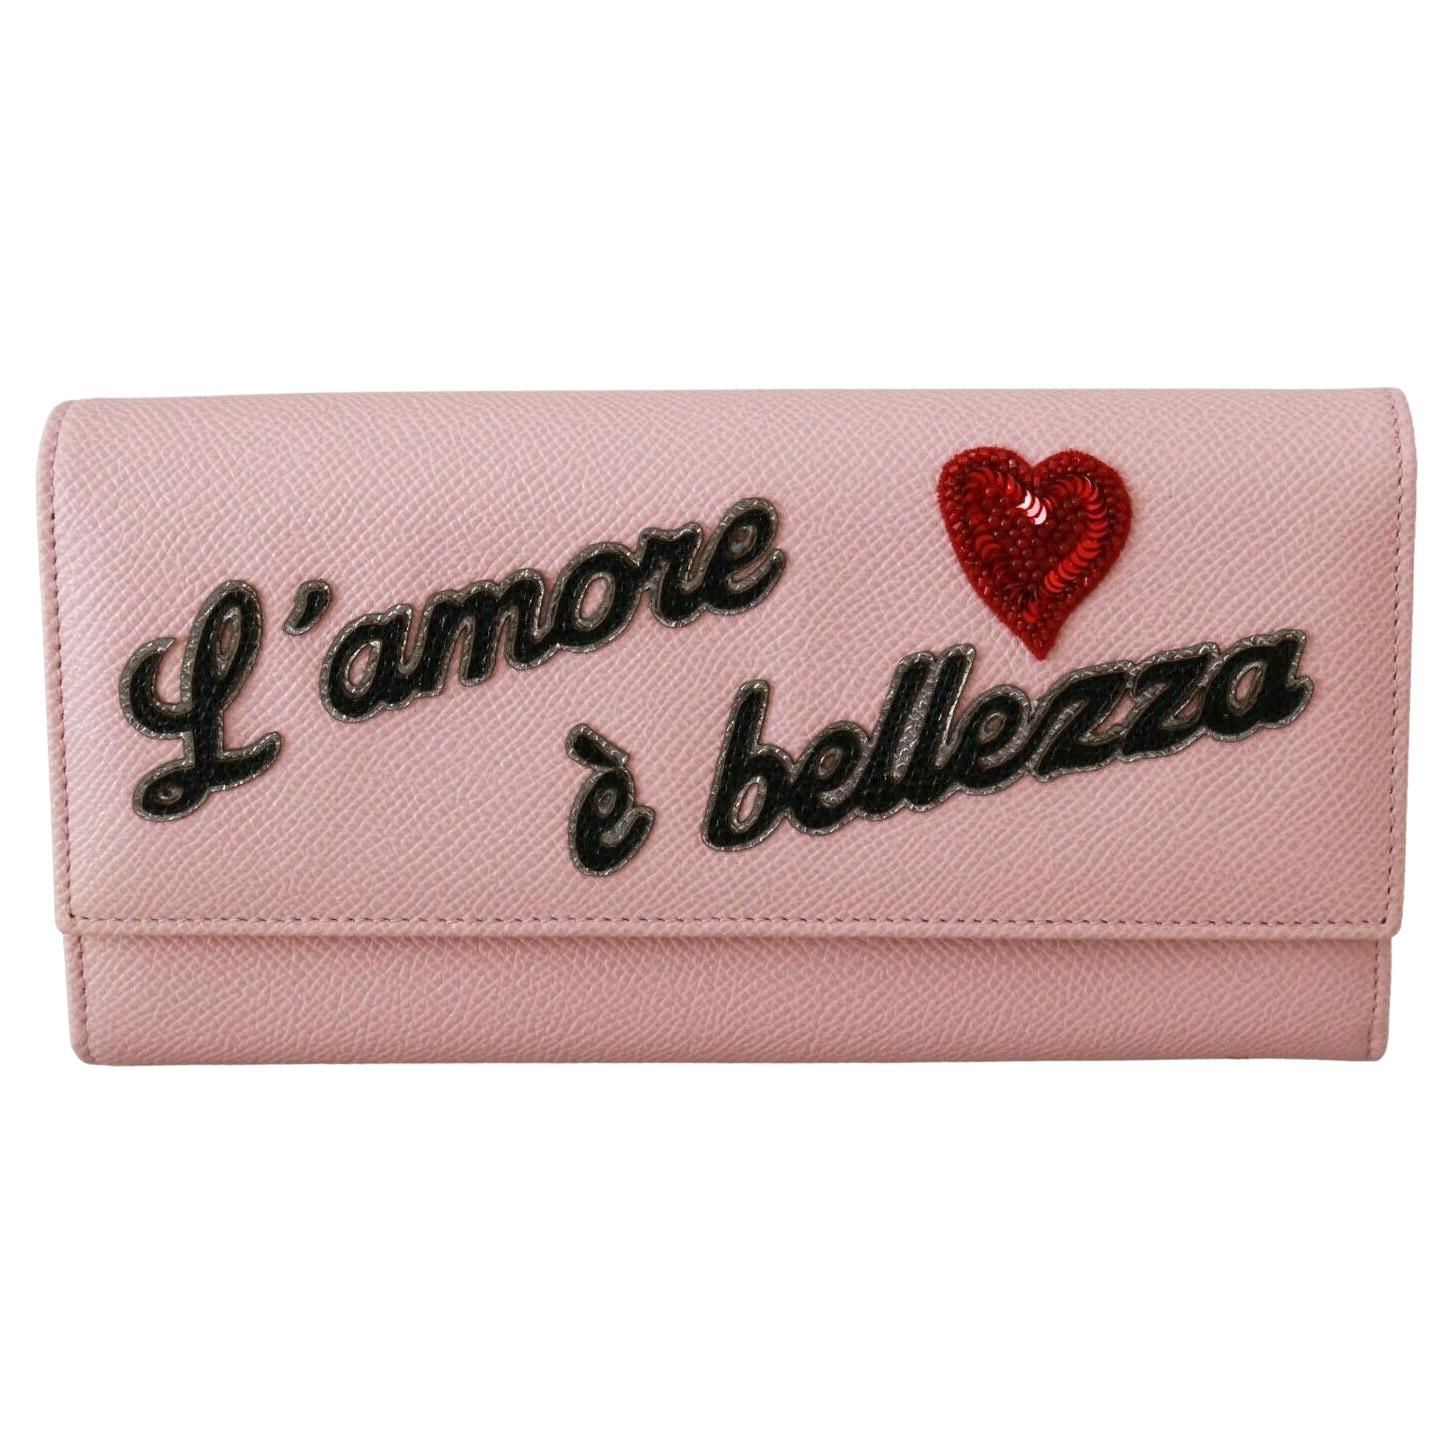 Dolce & Gabbana Pink Leather Lamore Bellezza Wallet Purse Cardholder Clutch For Sale